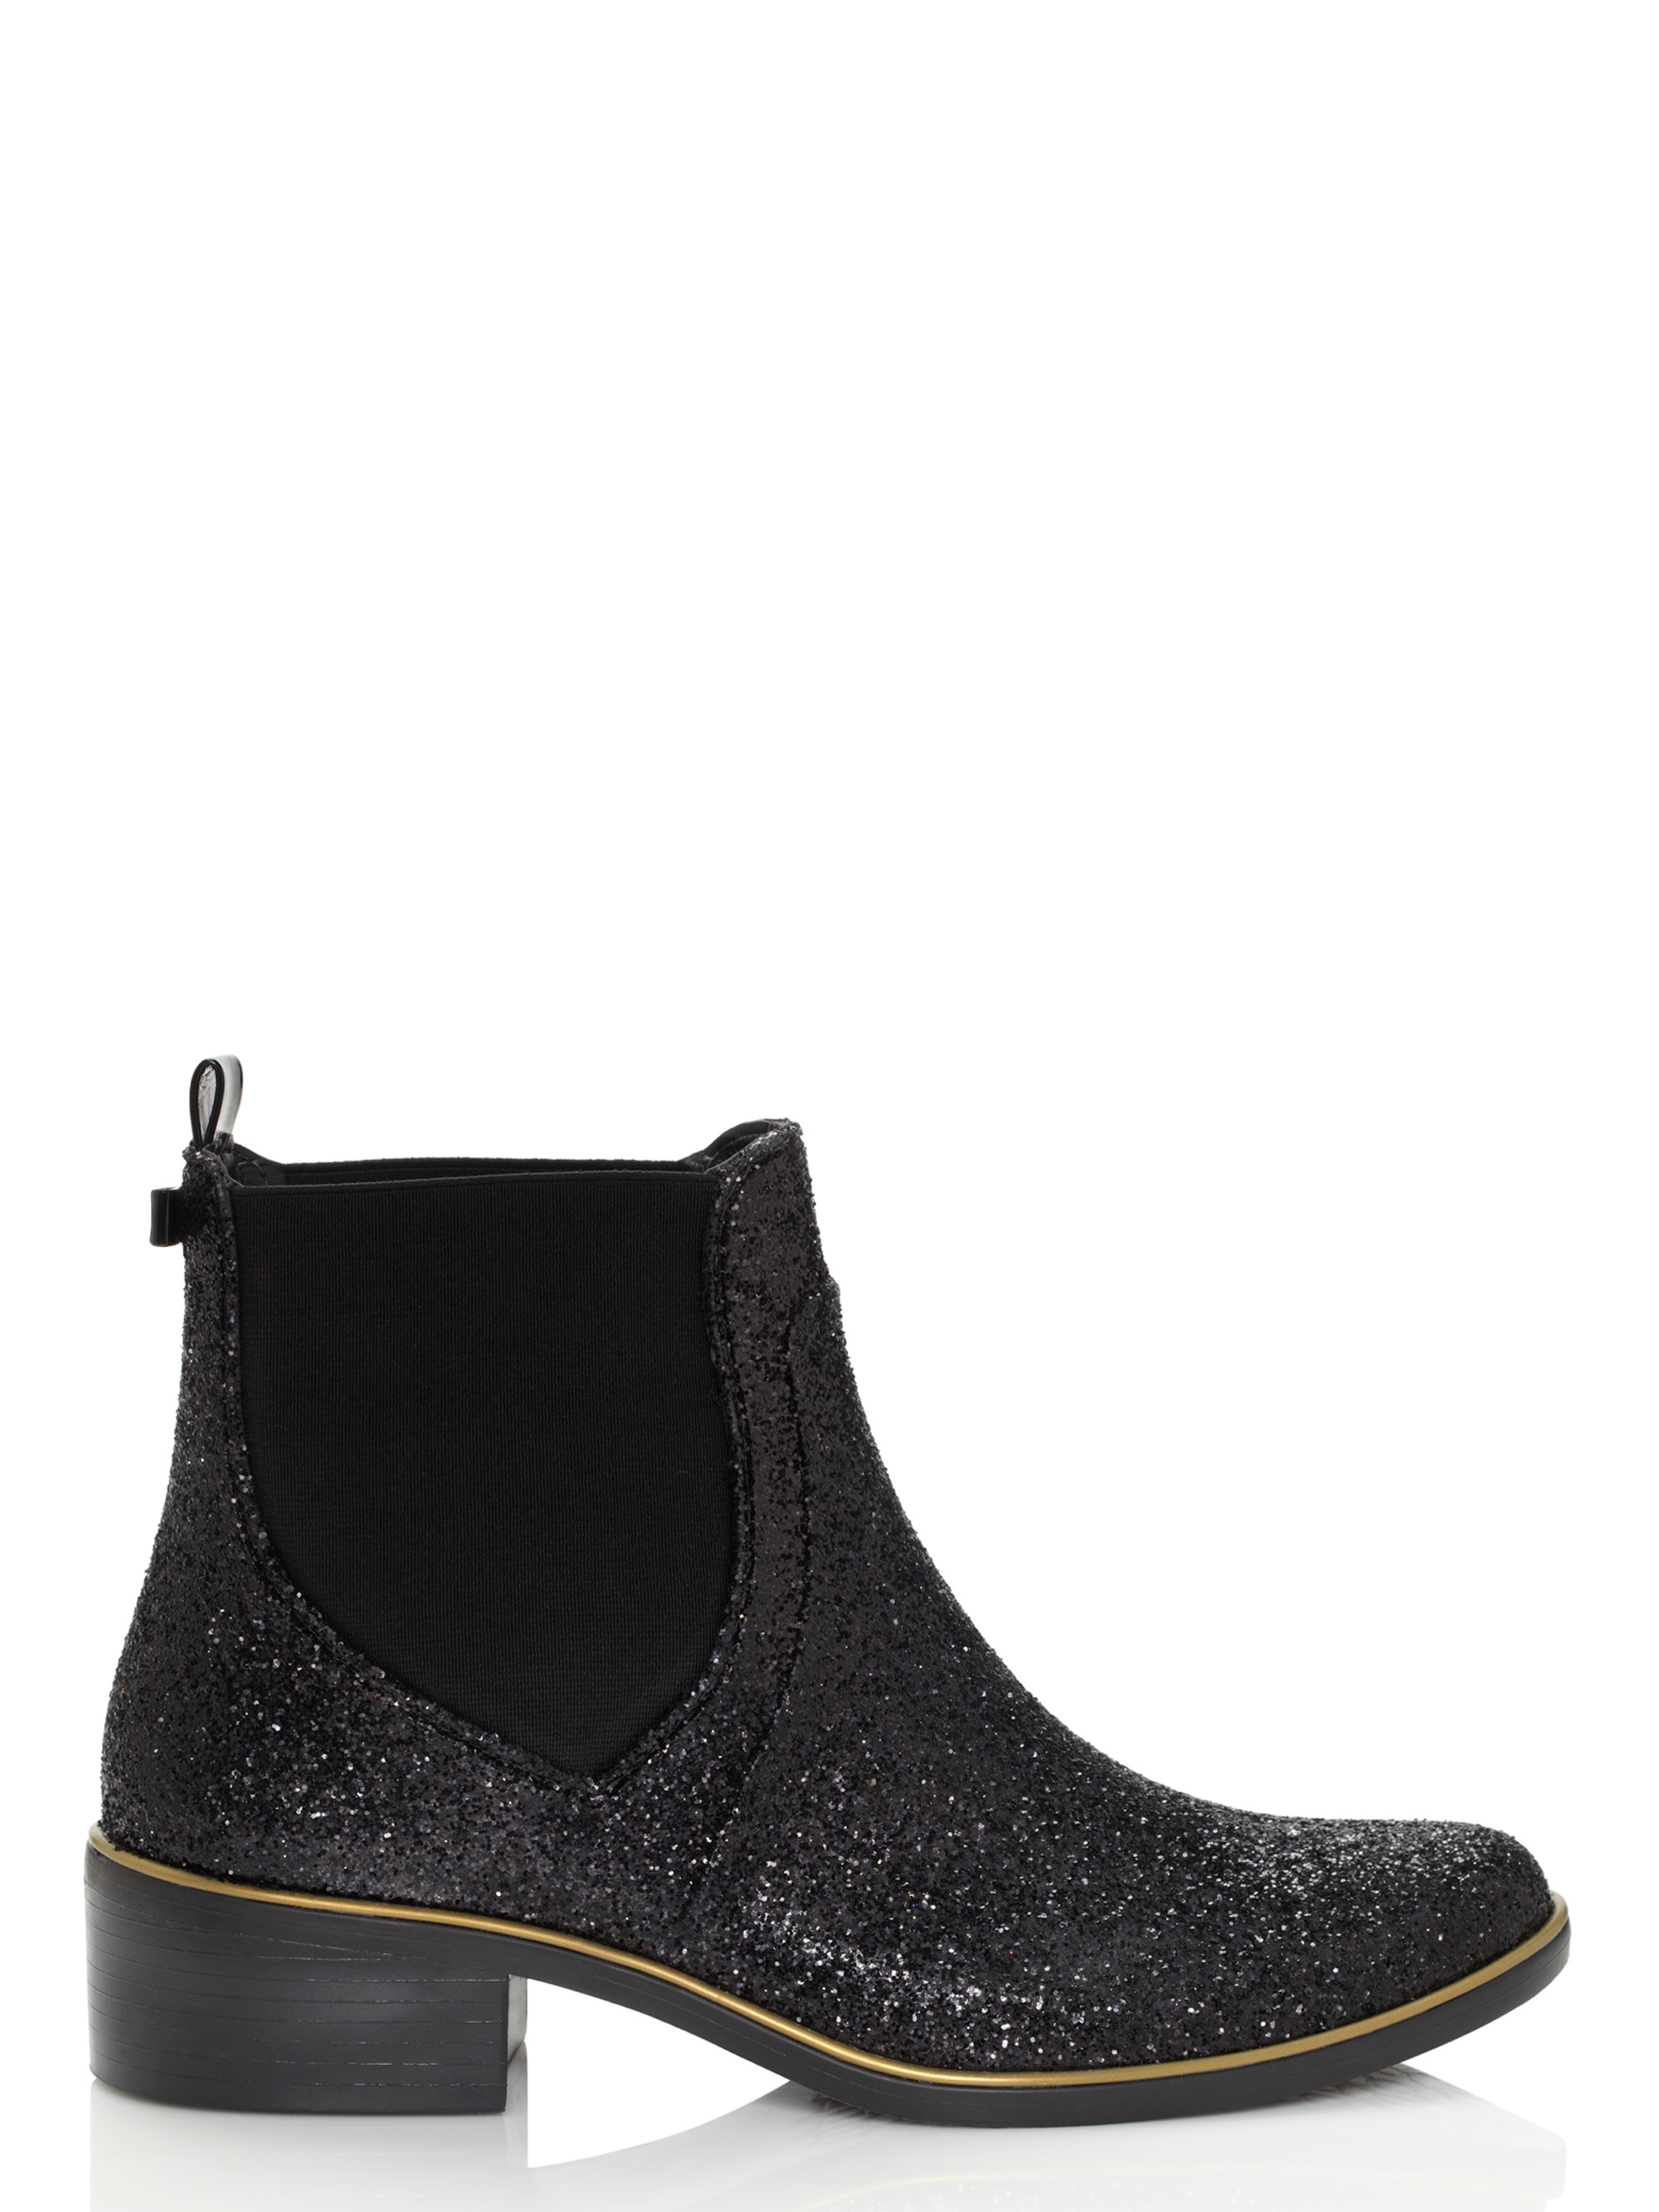 Kate spade new york Sedgewick Glitter Rain Boots in Black | Lyst